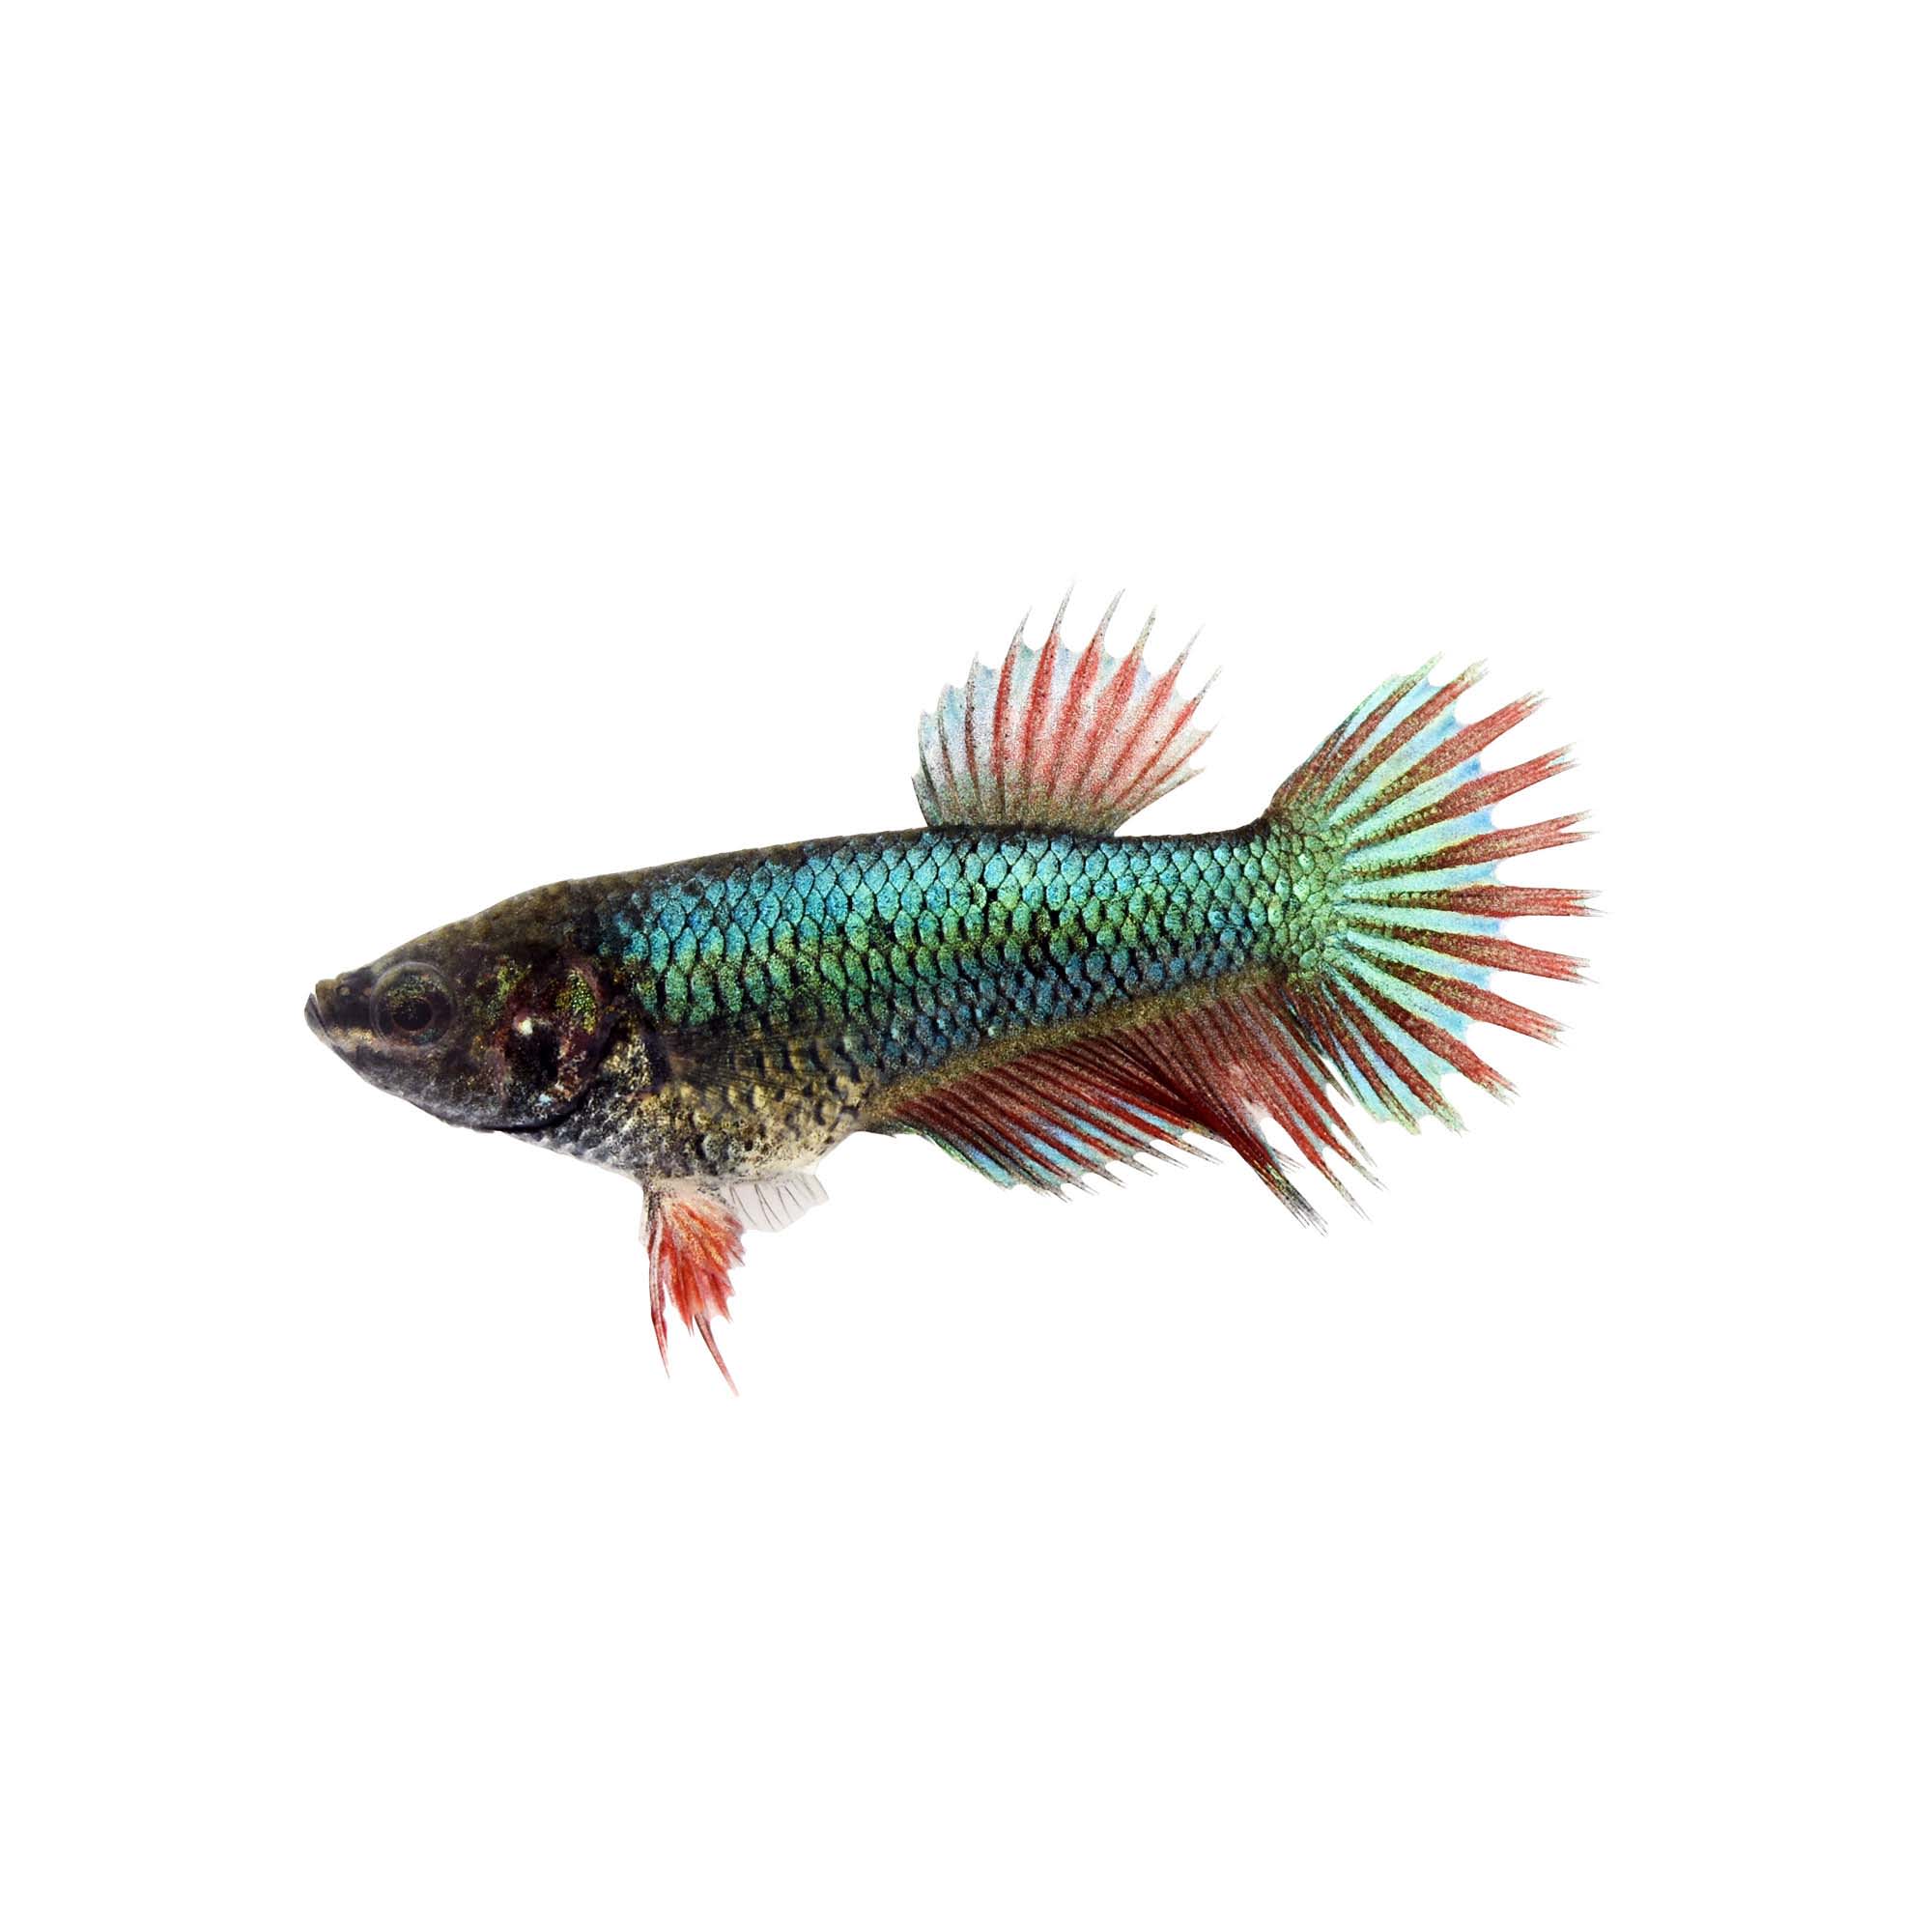 female betta fish for sale online